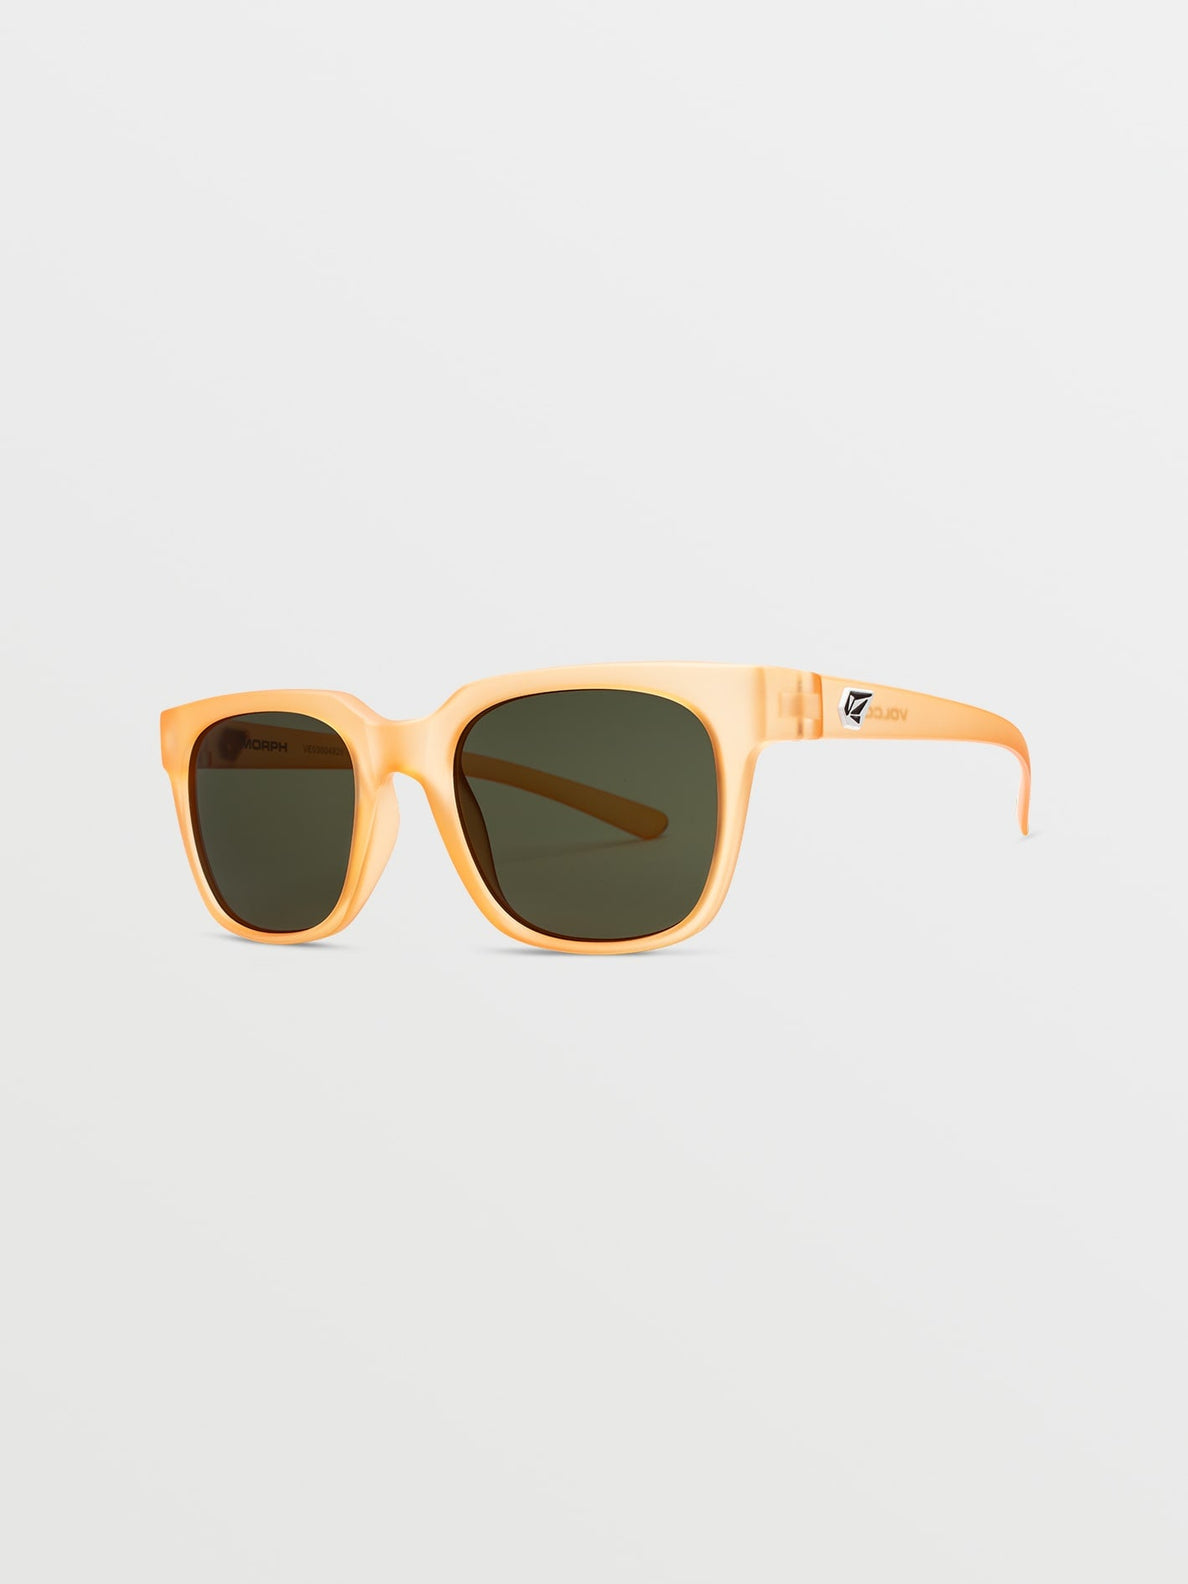 Morph Matte Amber Sunglasses (Green Gray Lens) - AMBER ROCK (VE03004826_AMB) [B]